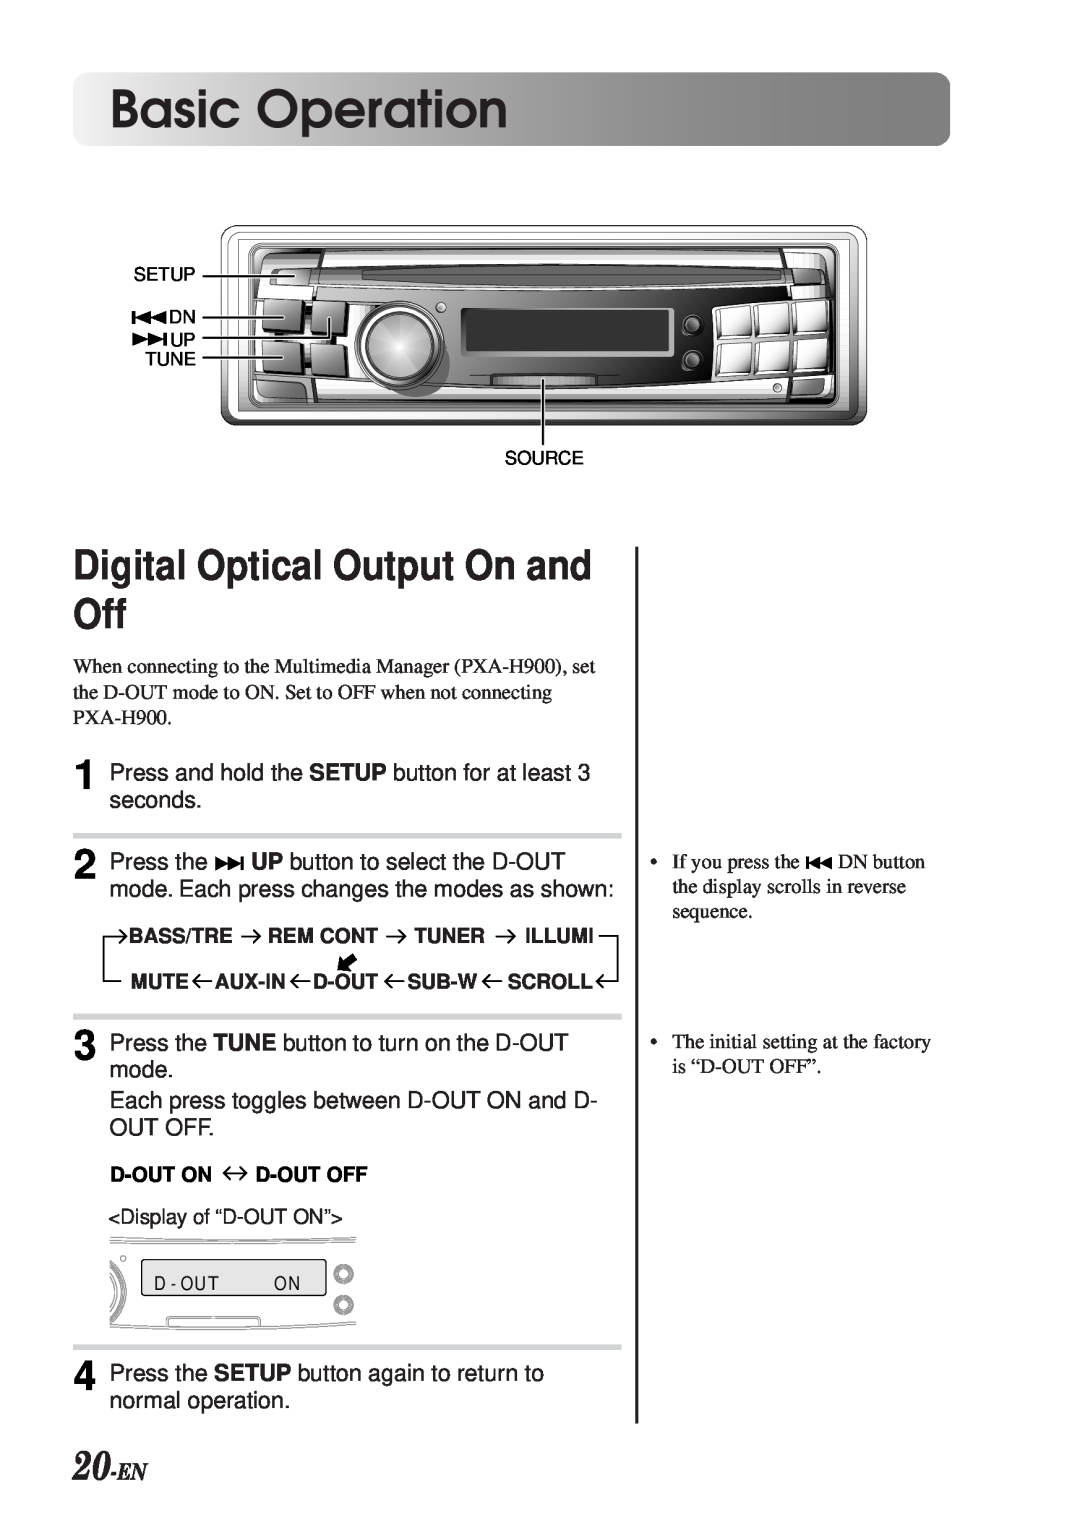 Alpine CDA-7990 manual Digital Optical Output On and Off, 20-EN, Basic Operation 